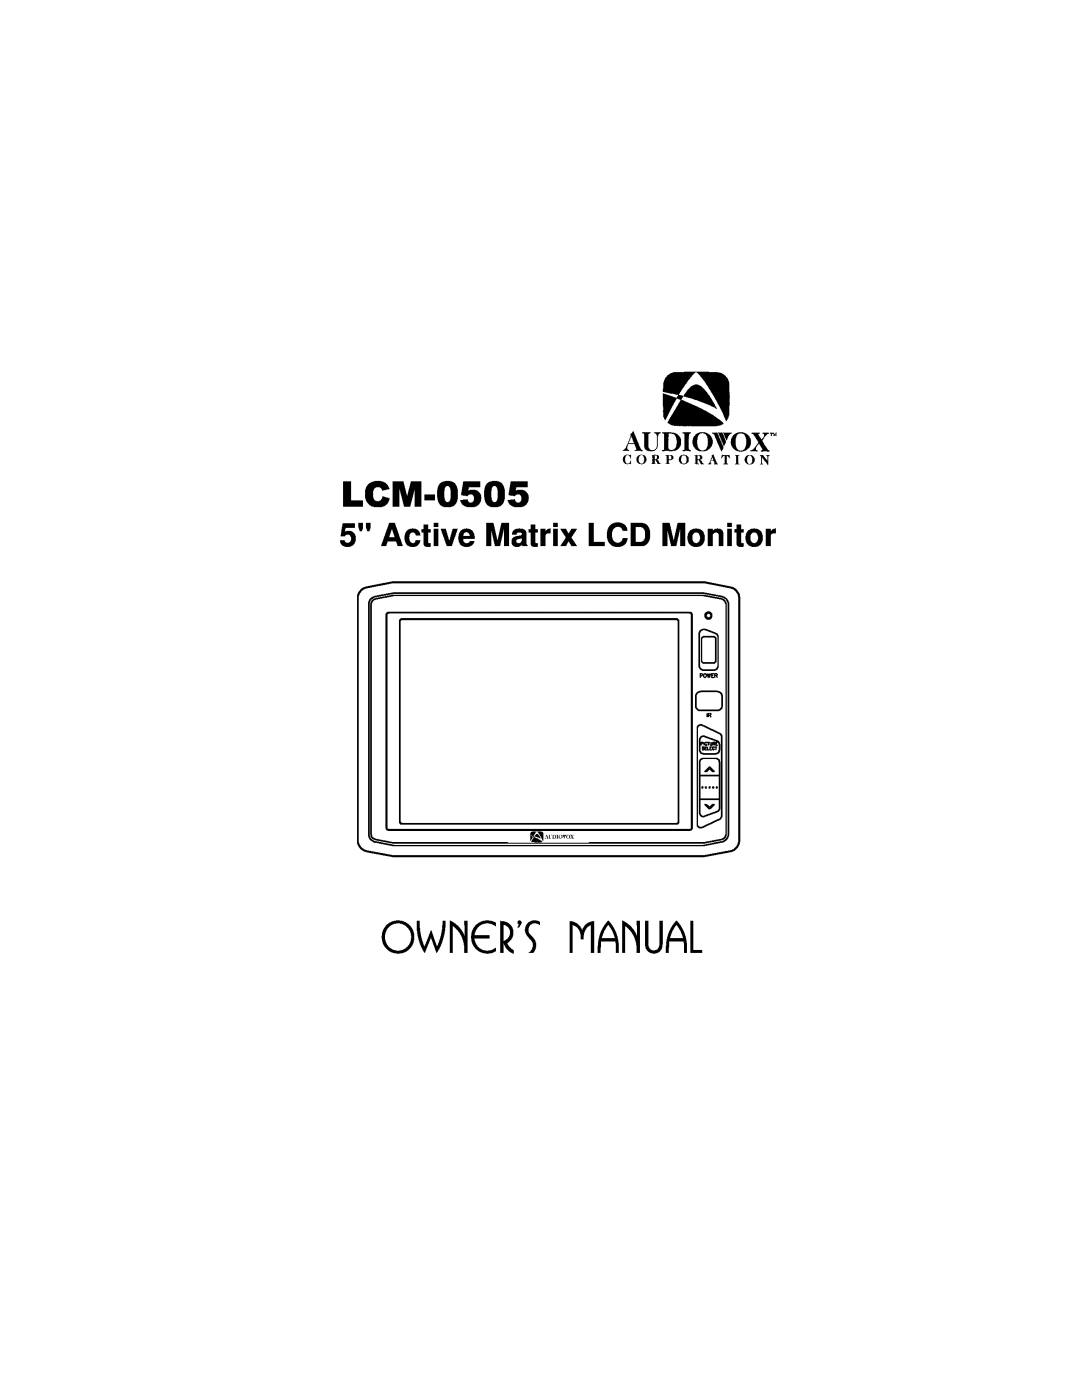 Audiovox LCM-0505 manual Owner’s Manual, Active Matrix LCD Monitor 